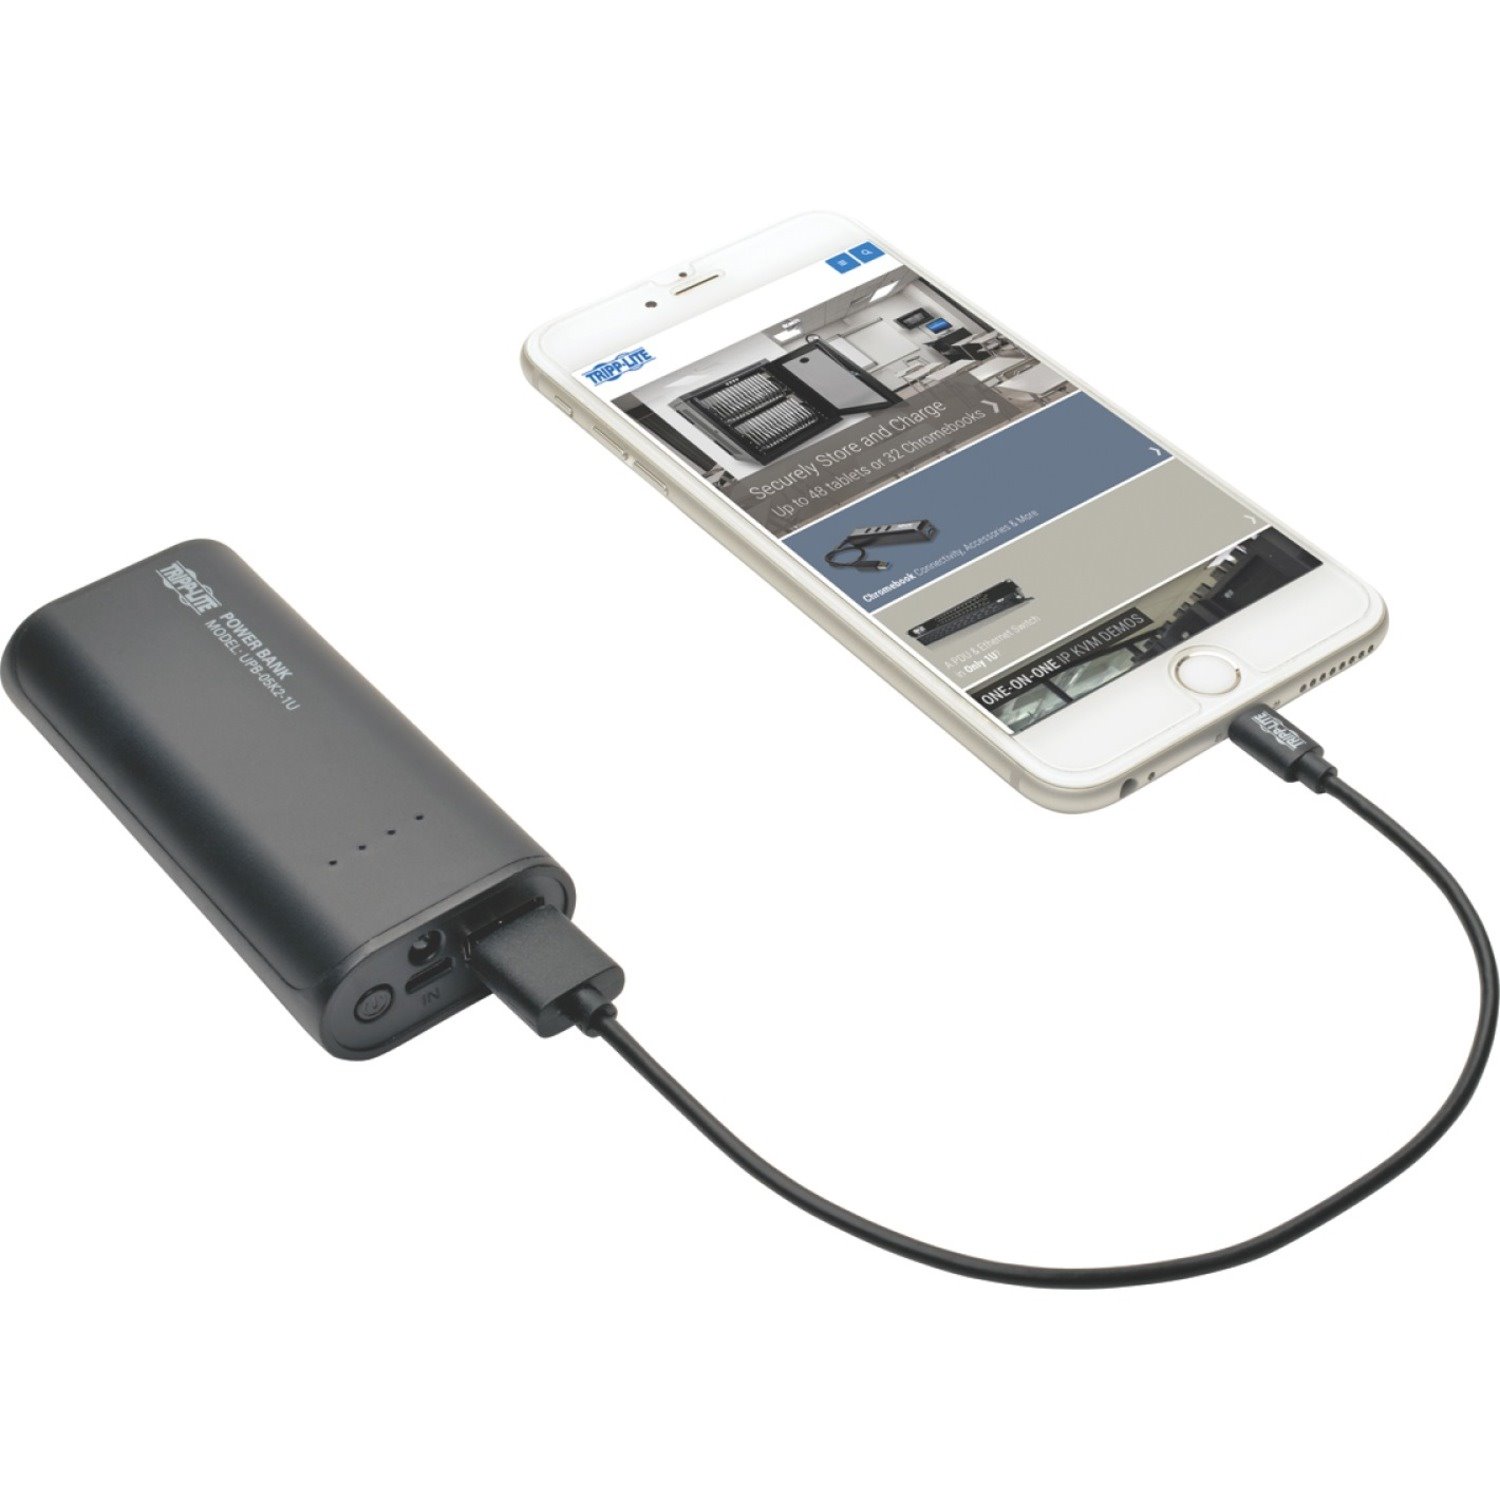 Tripp Lite Portable 1-Port USB Battery Charger Mobile Power Bank 5.2k mAh